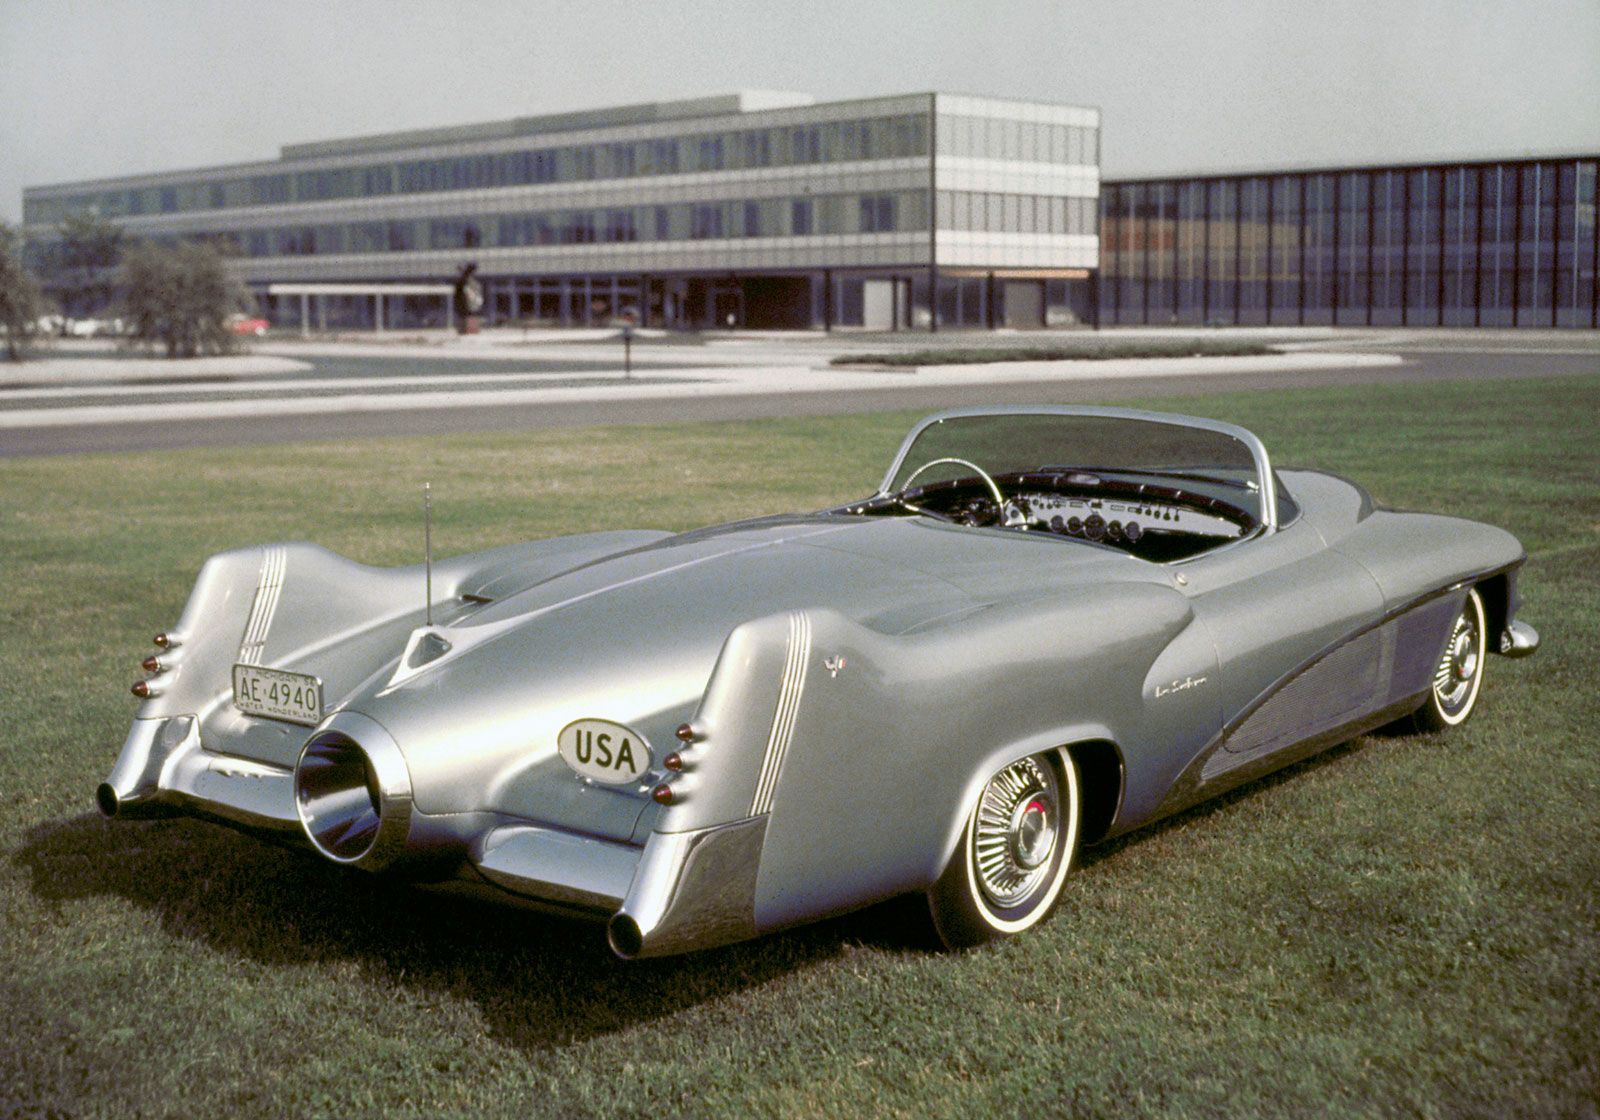 1951 GM LeSabre Concept Car parked on lawn; rear view